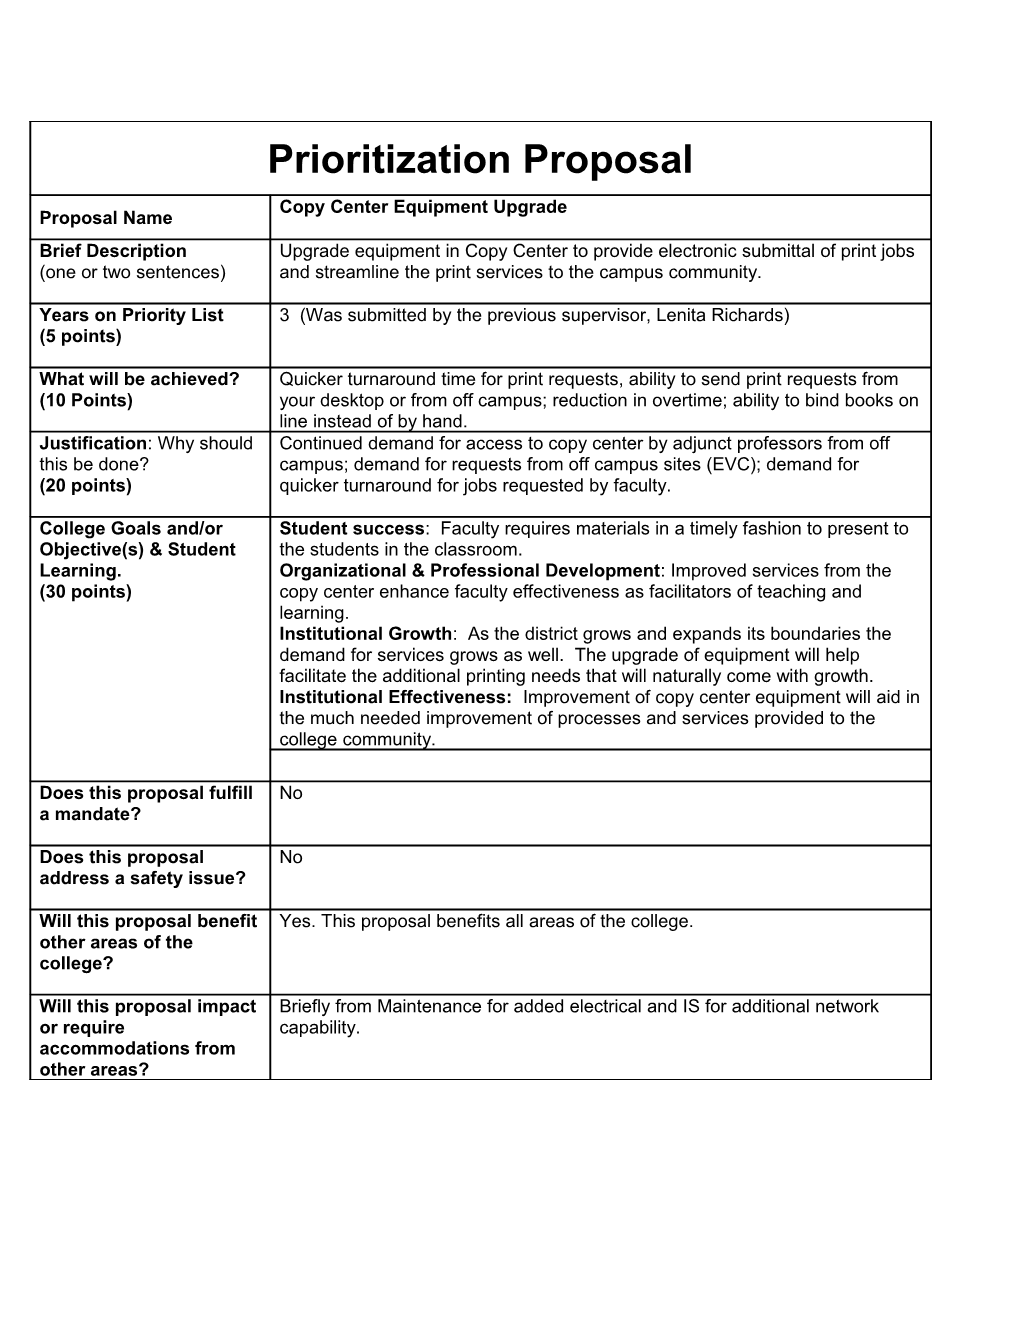 Prioritization Proposal (Sample)